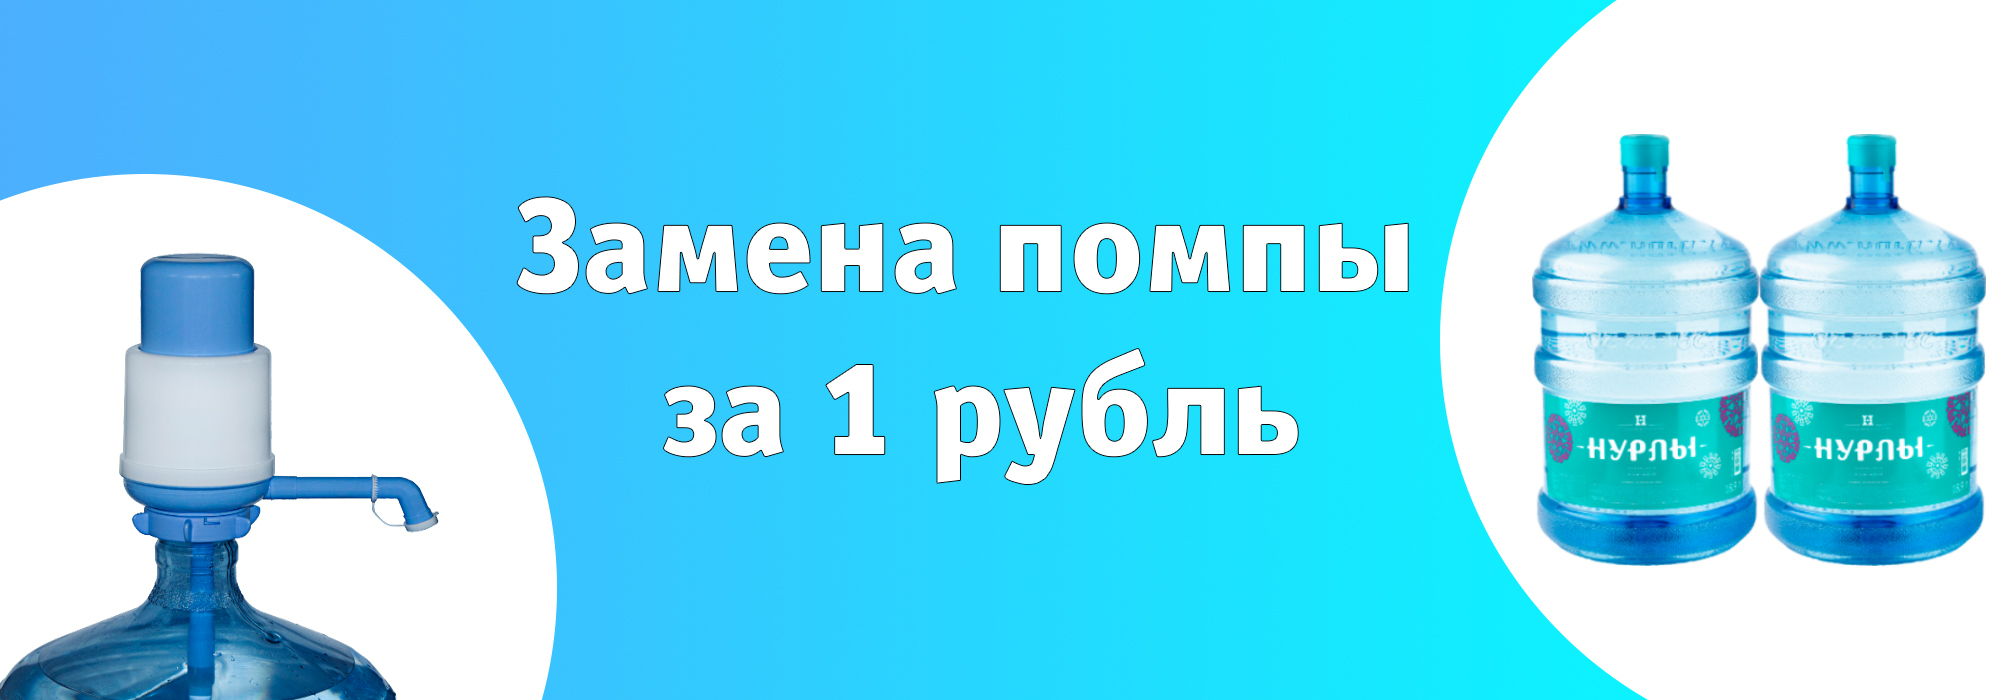 Акция "Замена помпы за 1 рубль" (завершена)